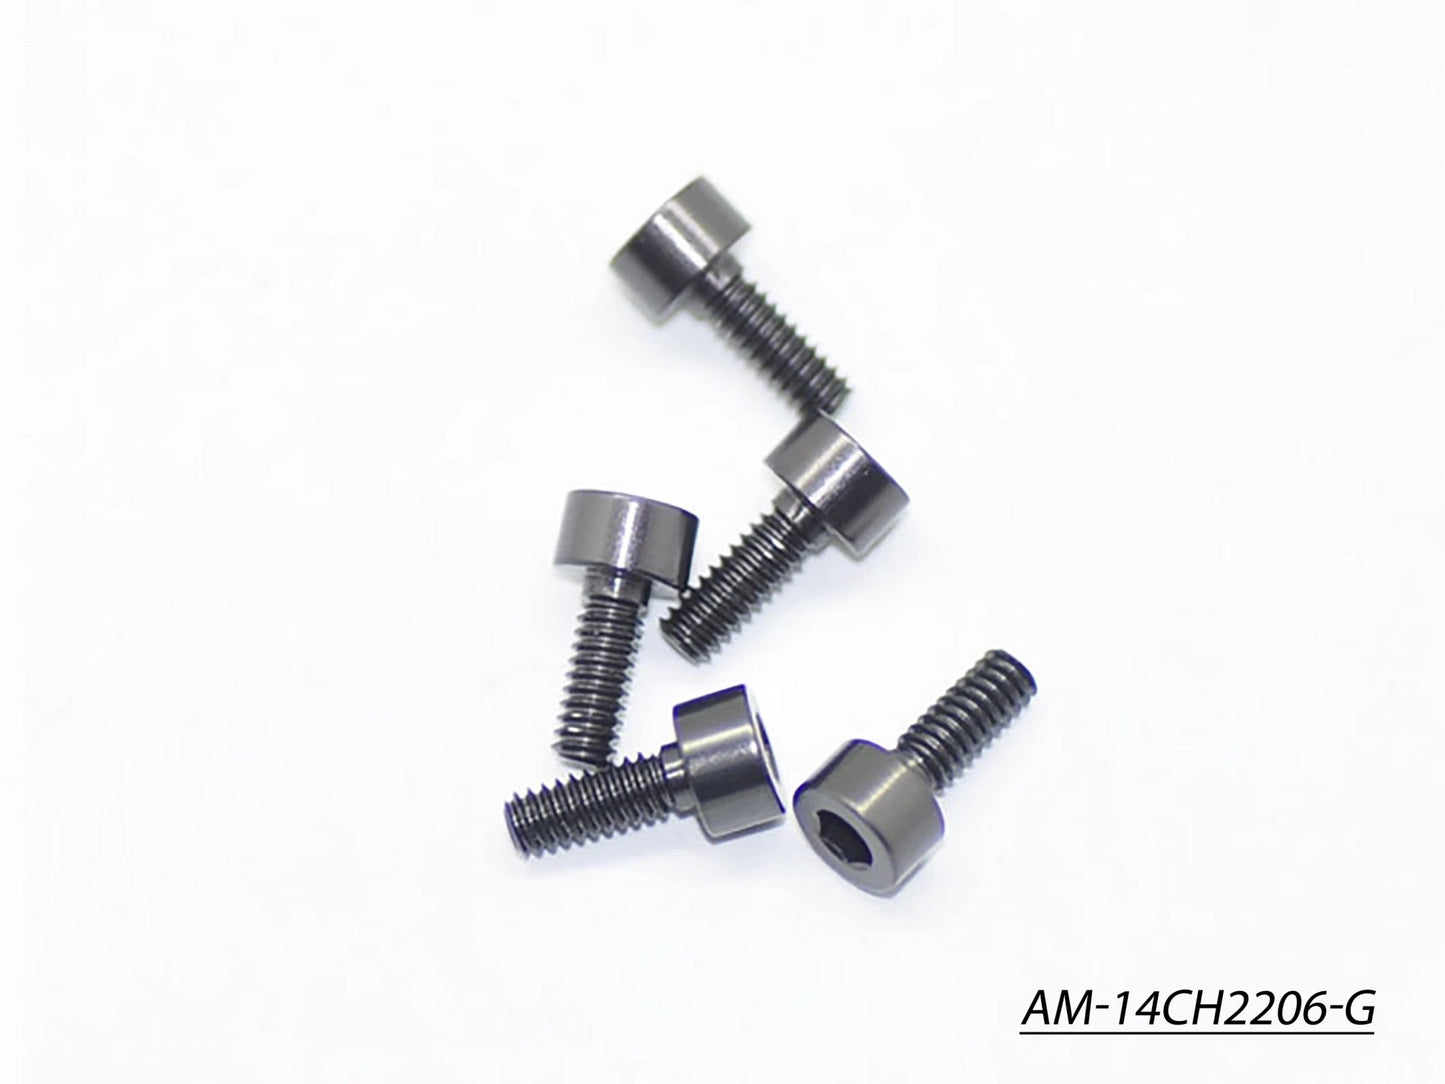 Alu Screw Allen Cilinder Head M2.2X6 Gray (7075) (5)  (AM-14CH2206-G)